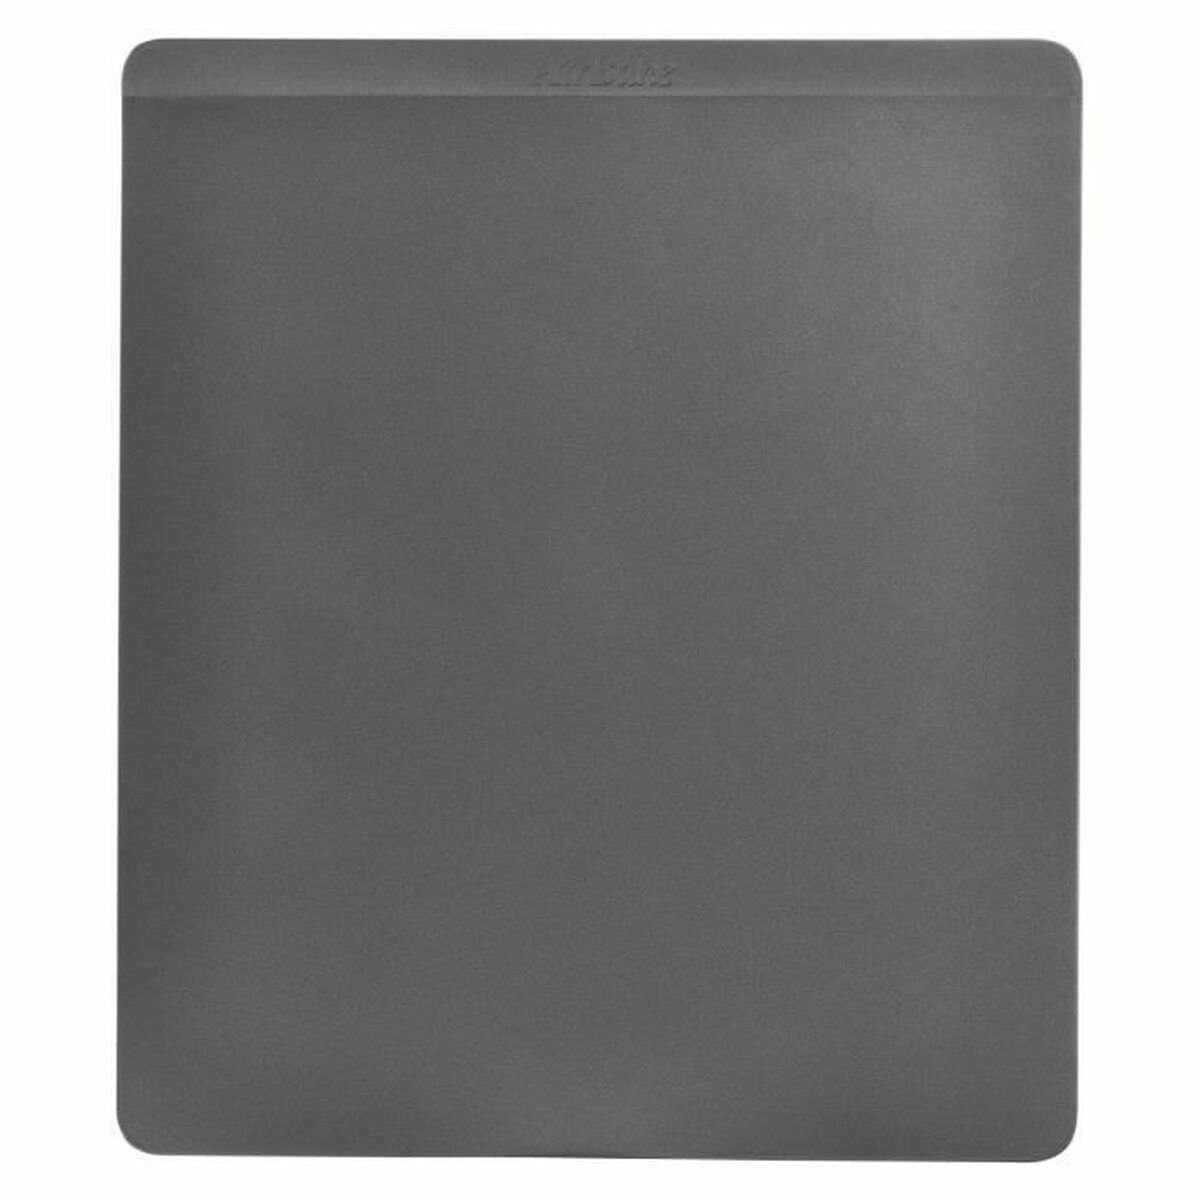 Schwarz 40 36 Tefal Ofenpfanne Auflaufform Airbake Stahl 0 Tefal cm, x